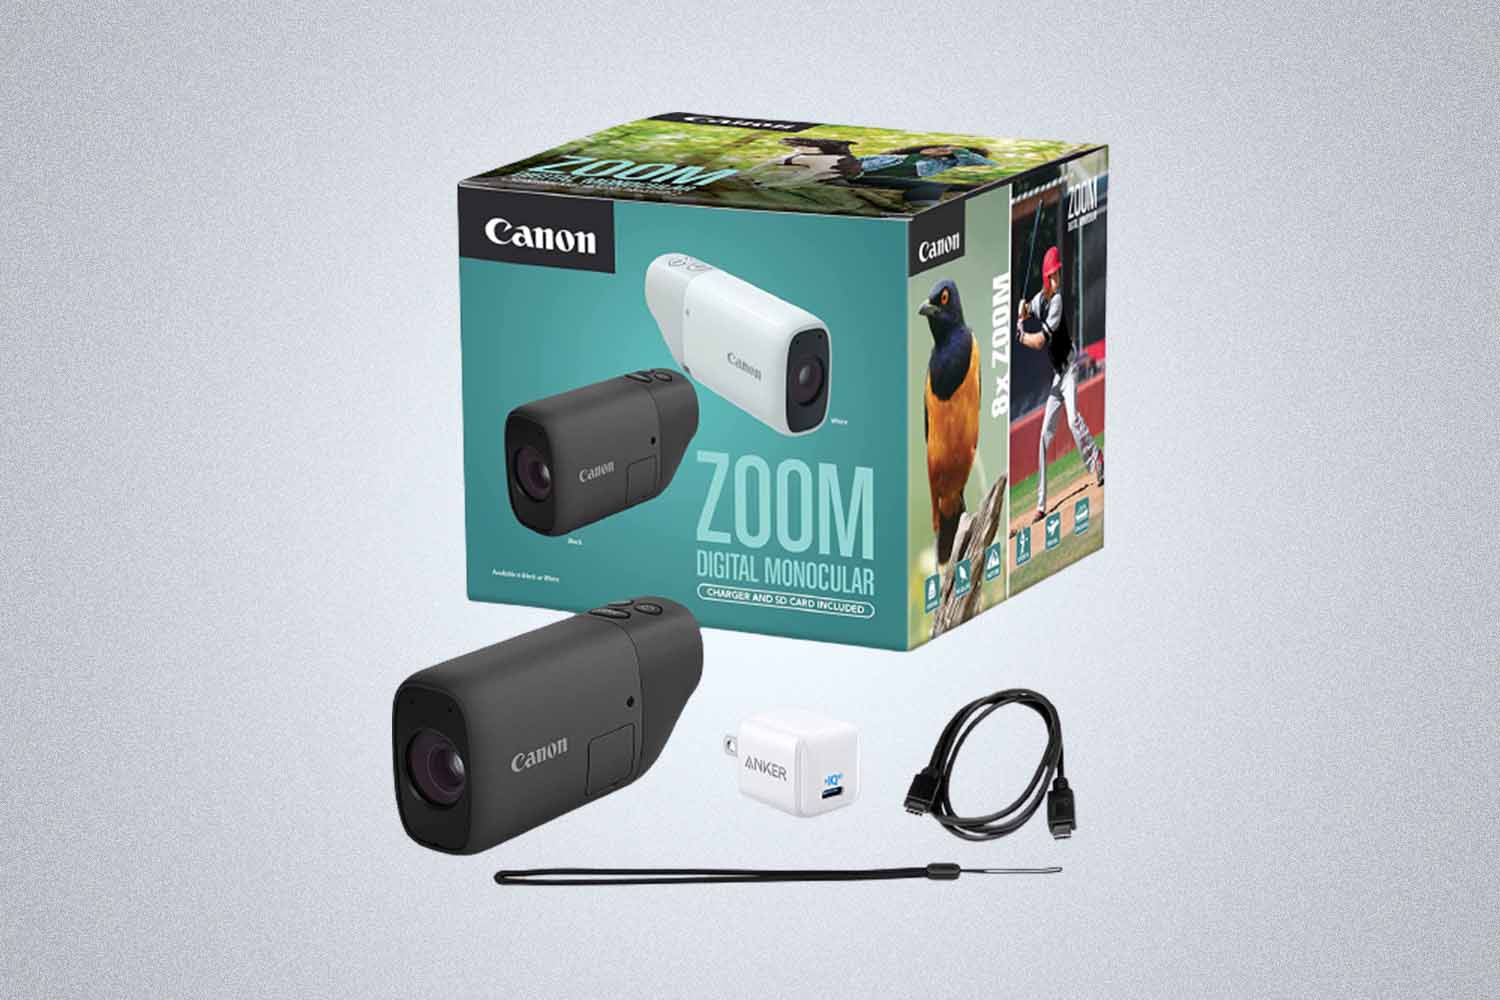 Canon Zoom Digital Monocular Kit